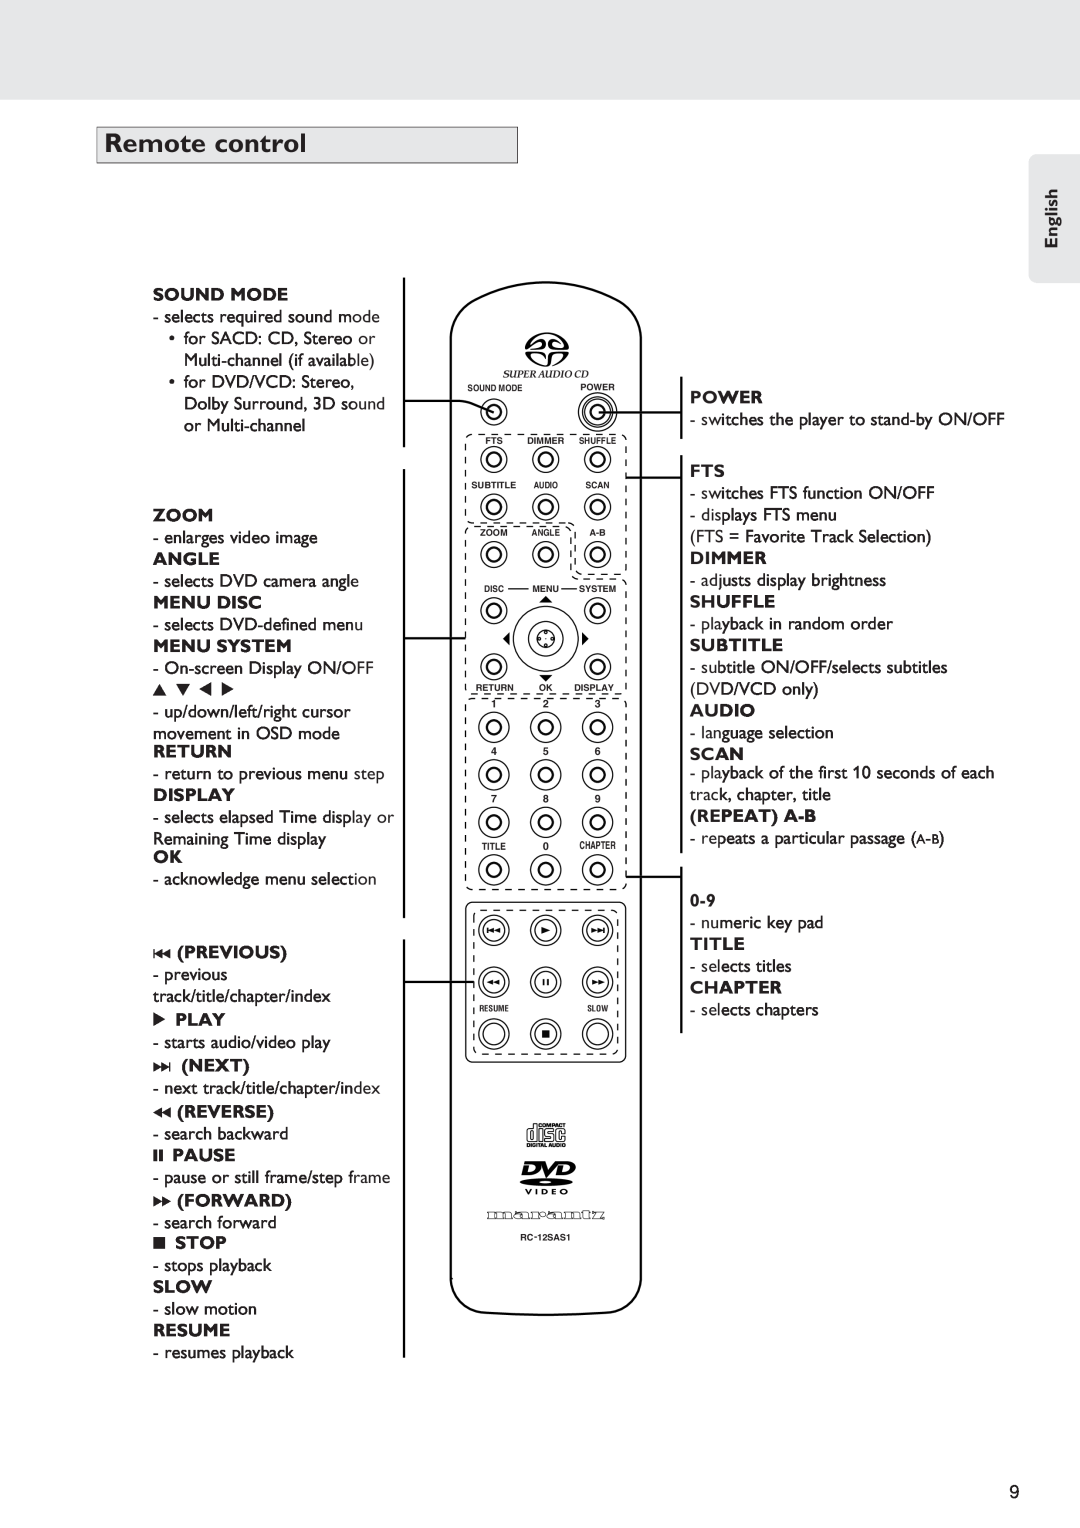 Marantz SA-12S1 Remote control, English, Sound Mode, Zoom, Angle, Menu Disc, Menu System, Return, Display, Pause, Slow 